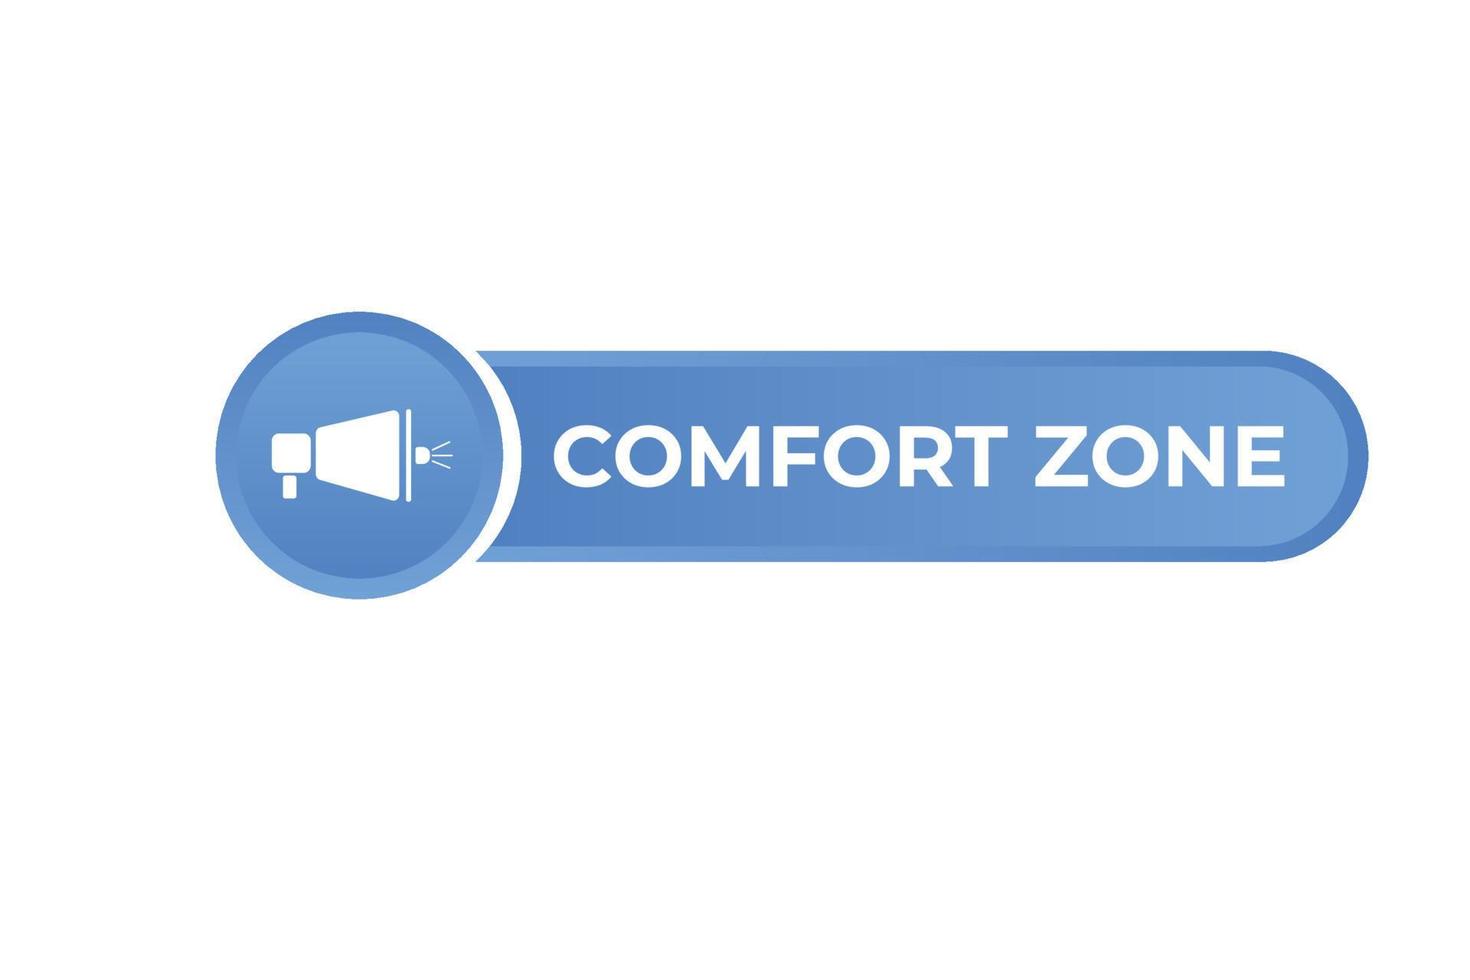 Comfort Zone Button web template Speech Bubble Banner Label Comfort Zone sign icon Vector illustration